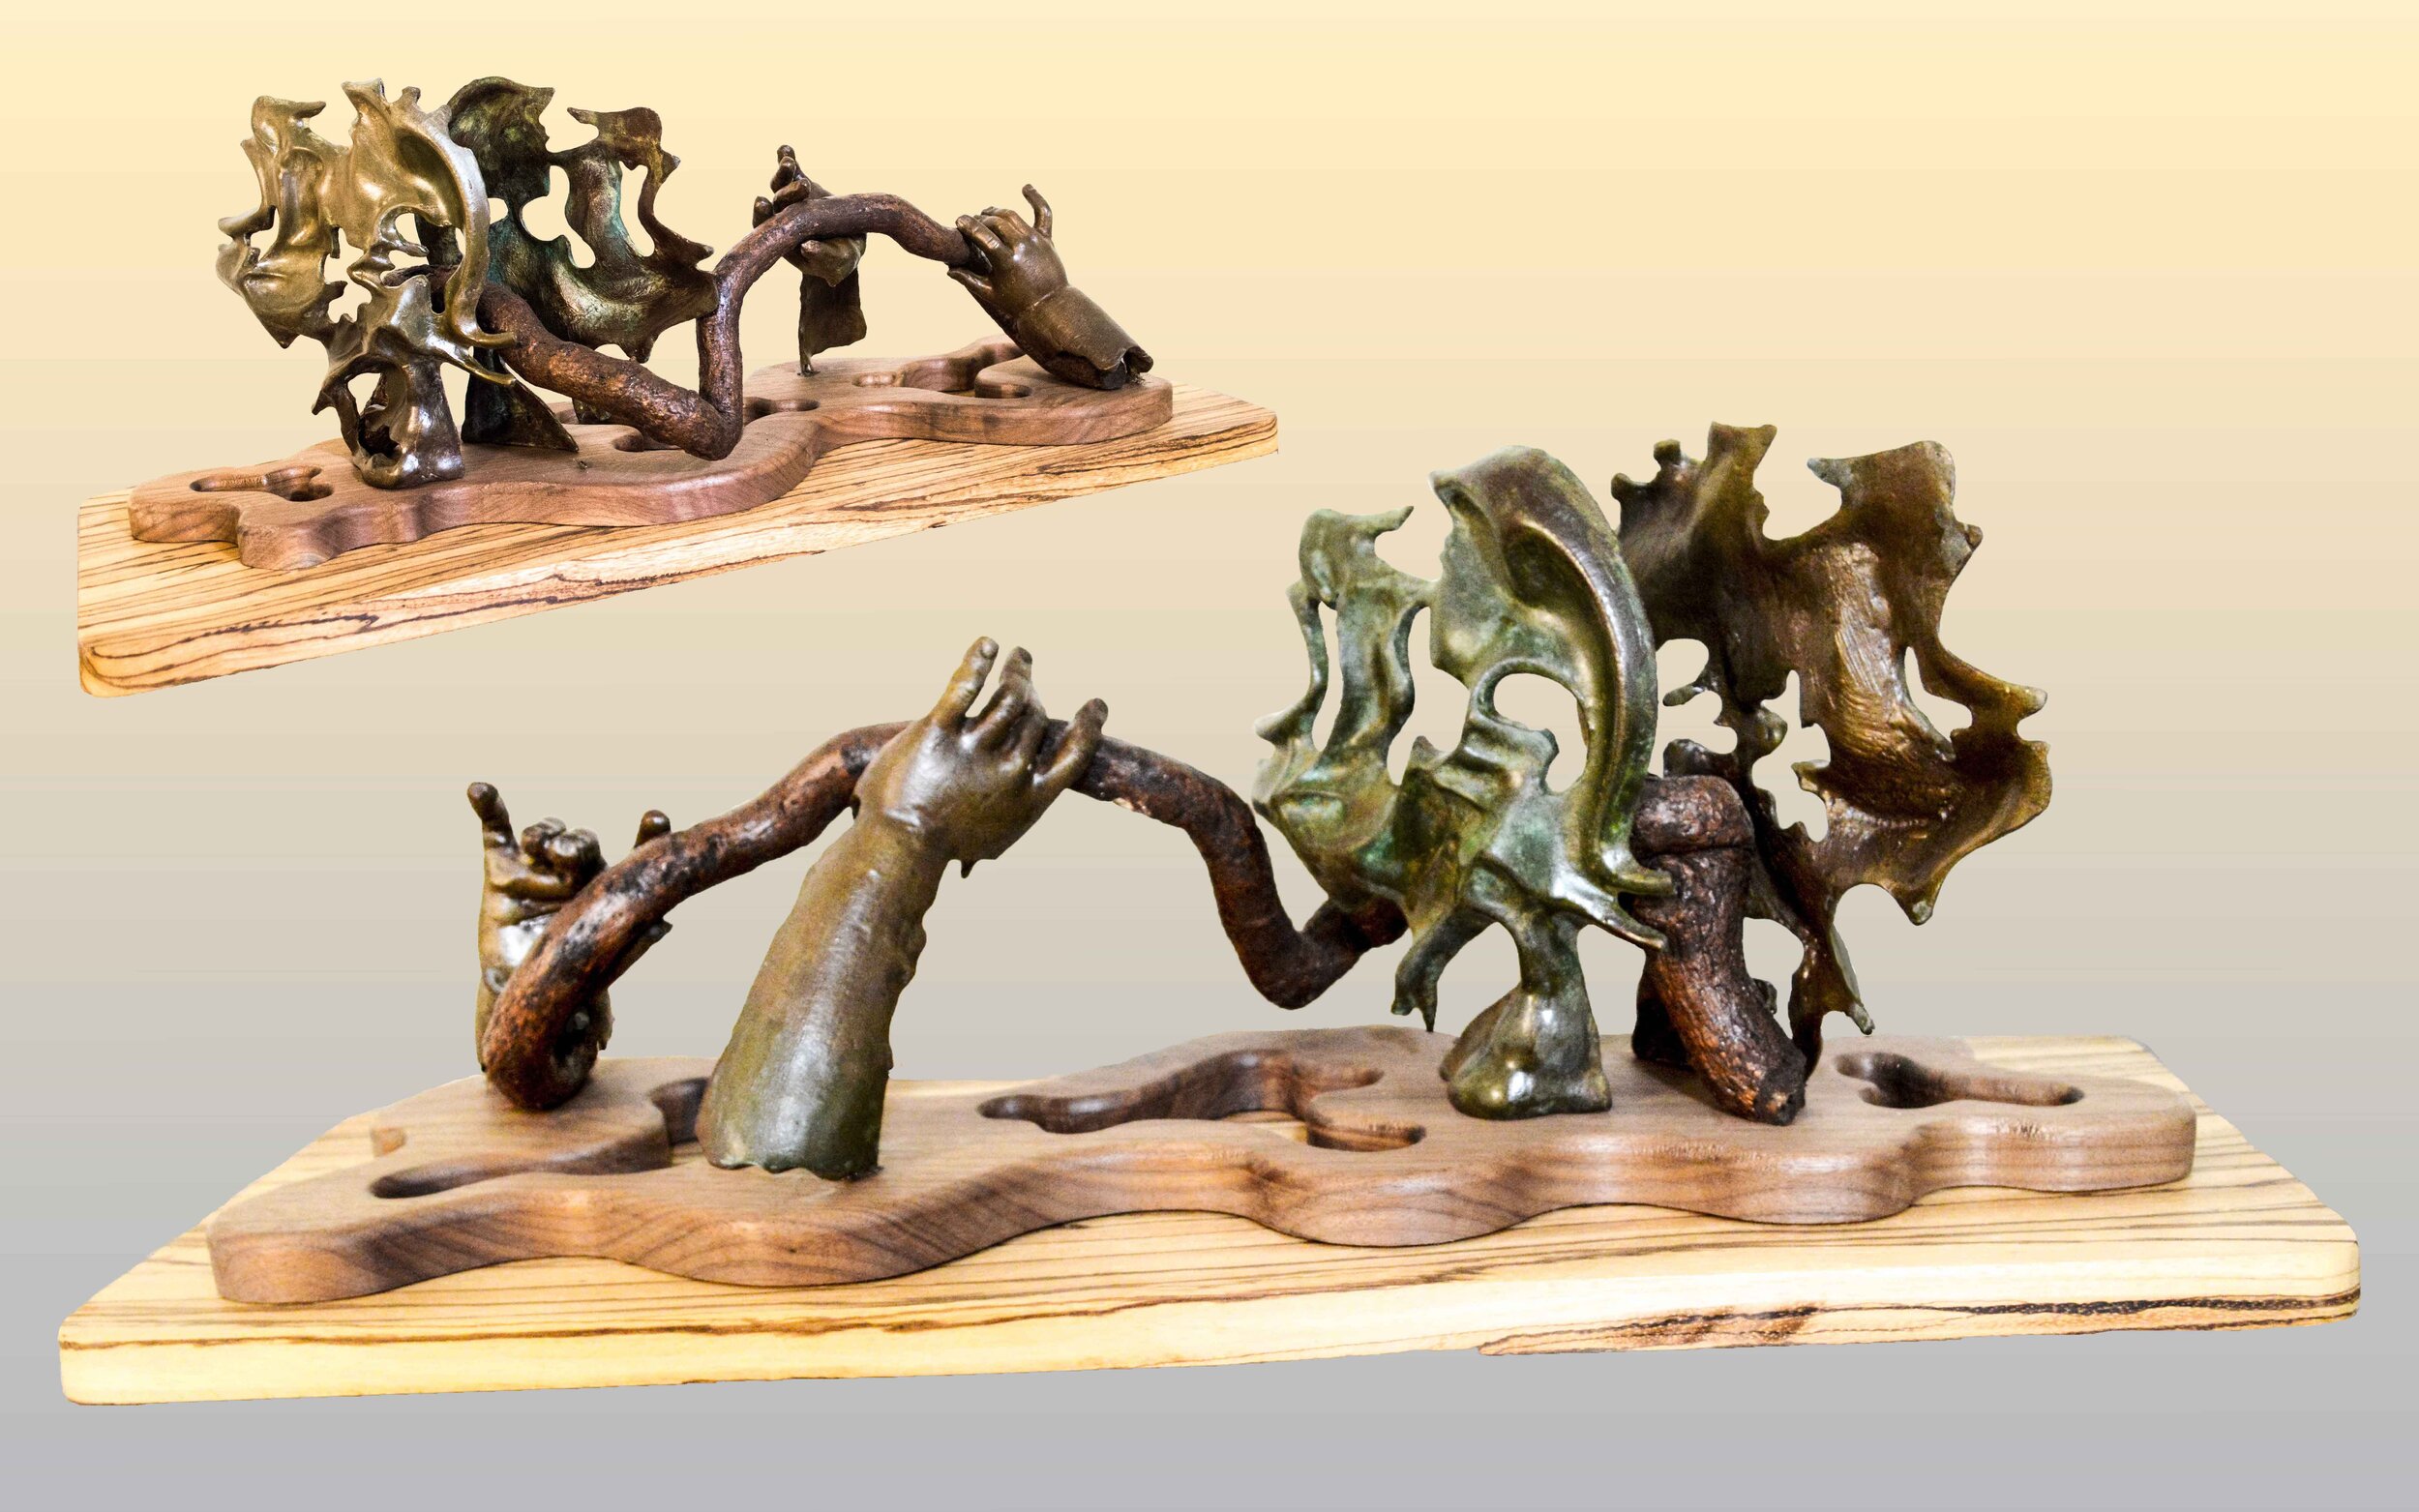    Shaman’s Portal  , bronze, zebrawood and walnut, 23” x 9” x 9”h 